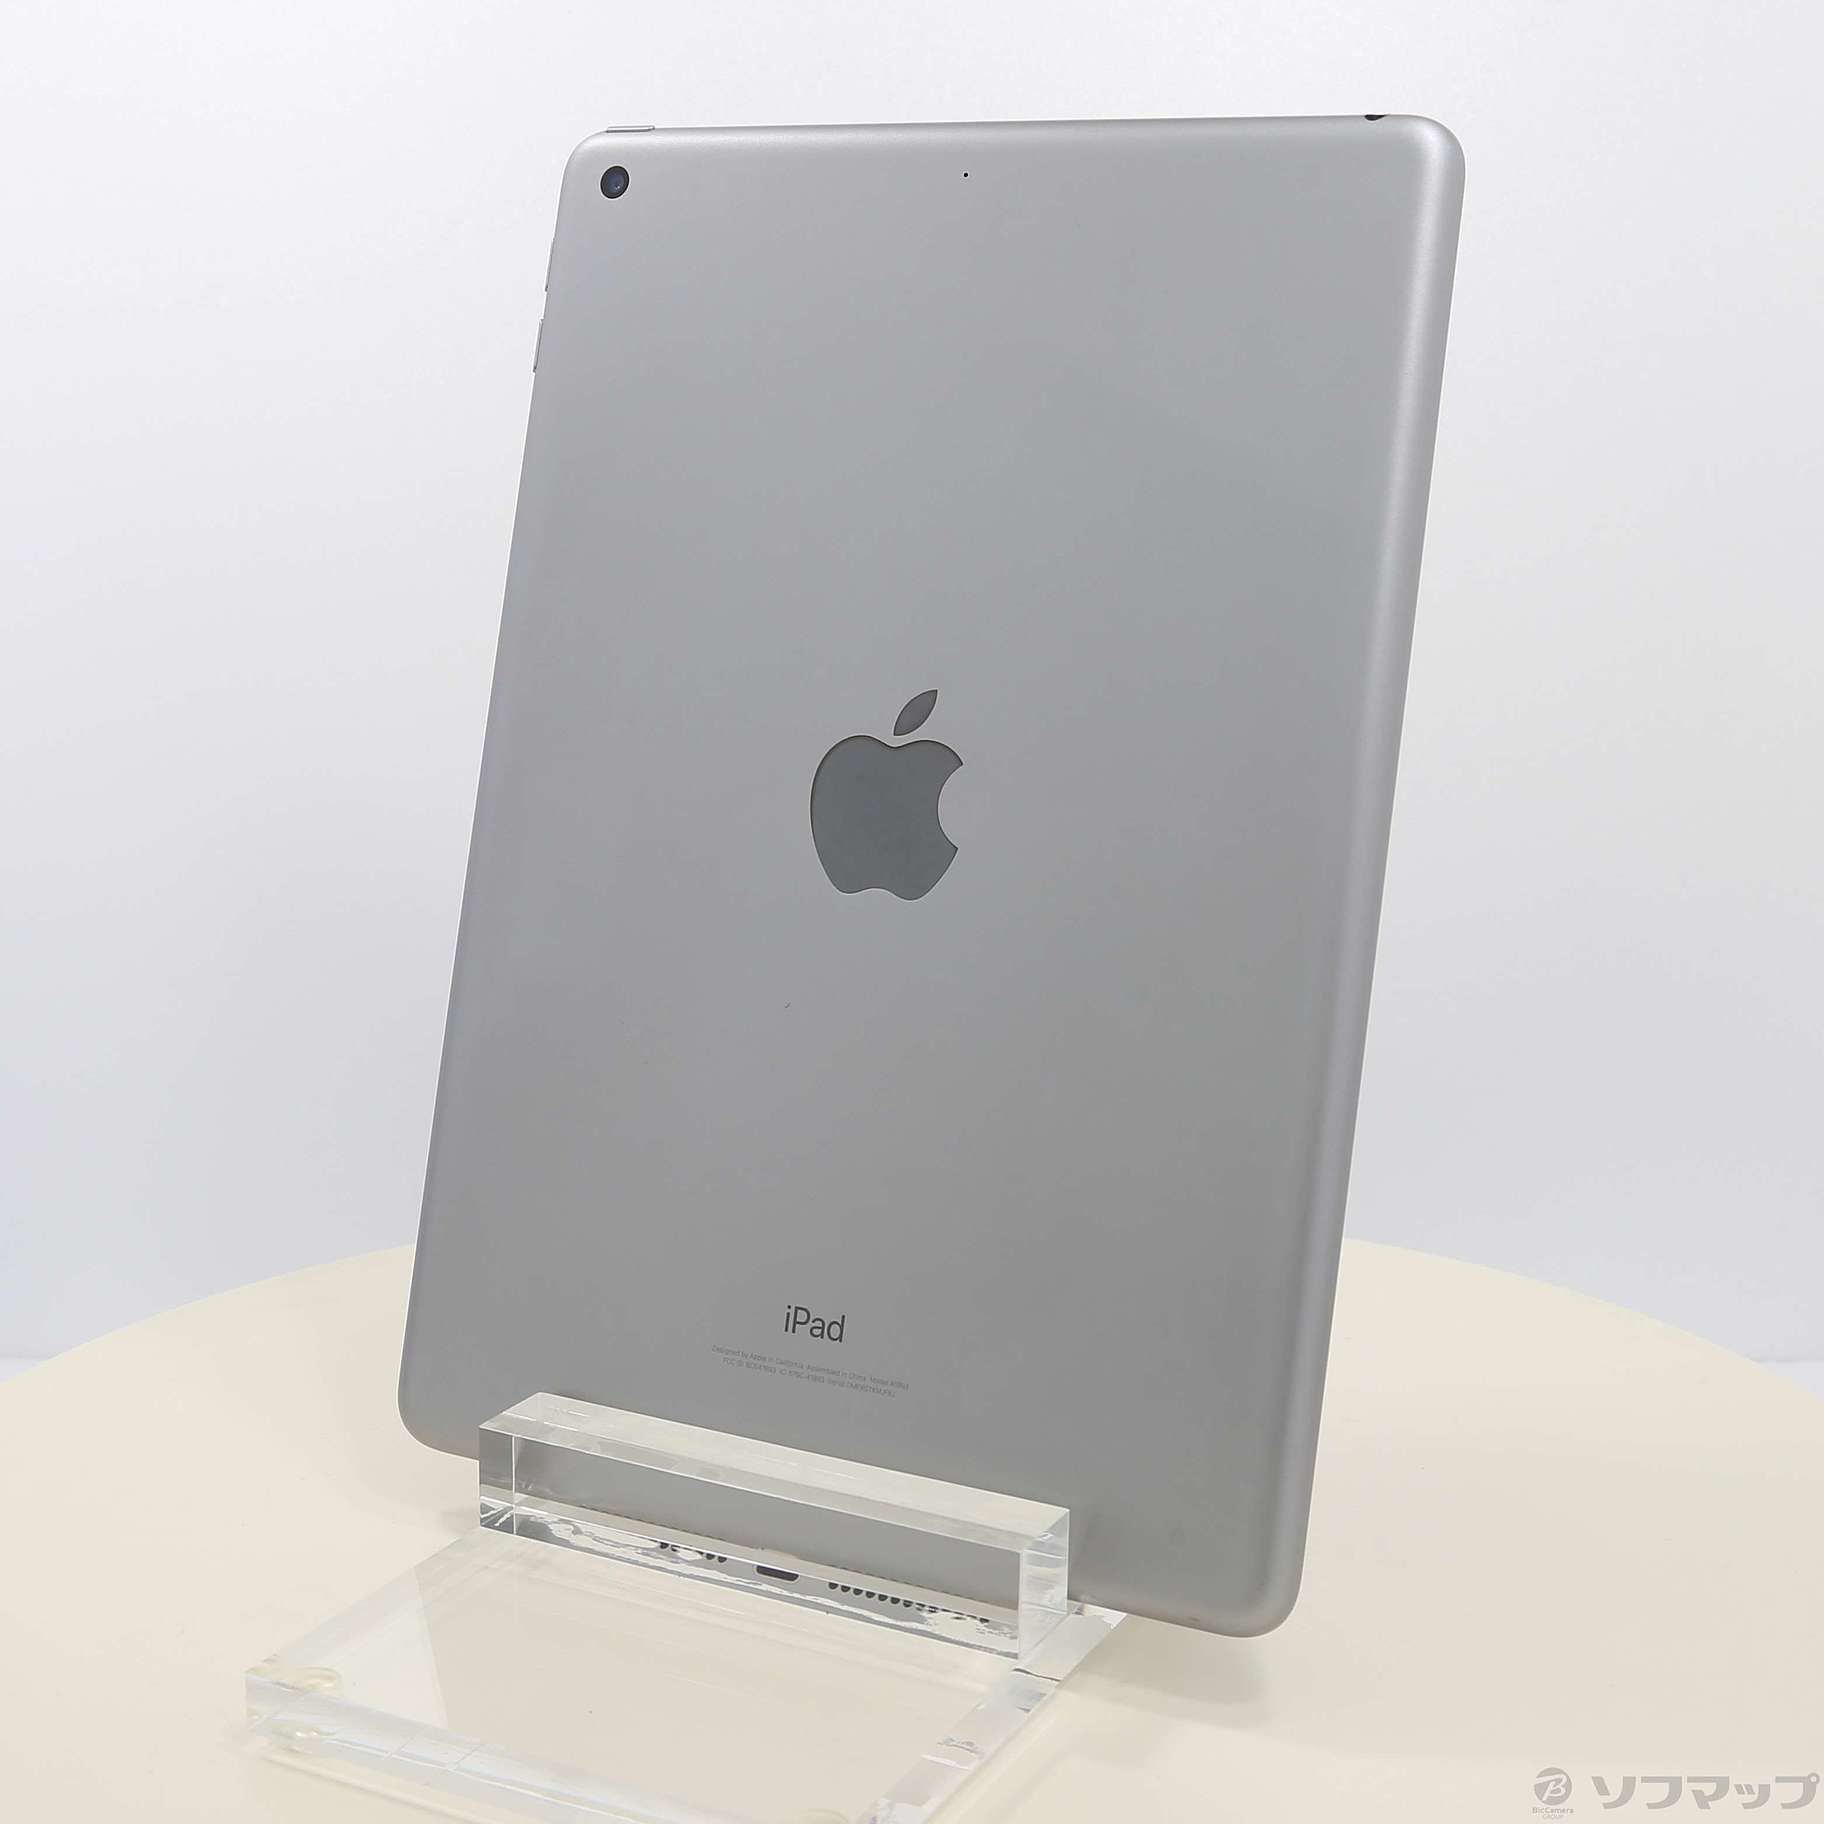 Apple iPad 第6世代 Wi-Fi 32GB Space Gray